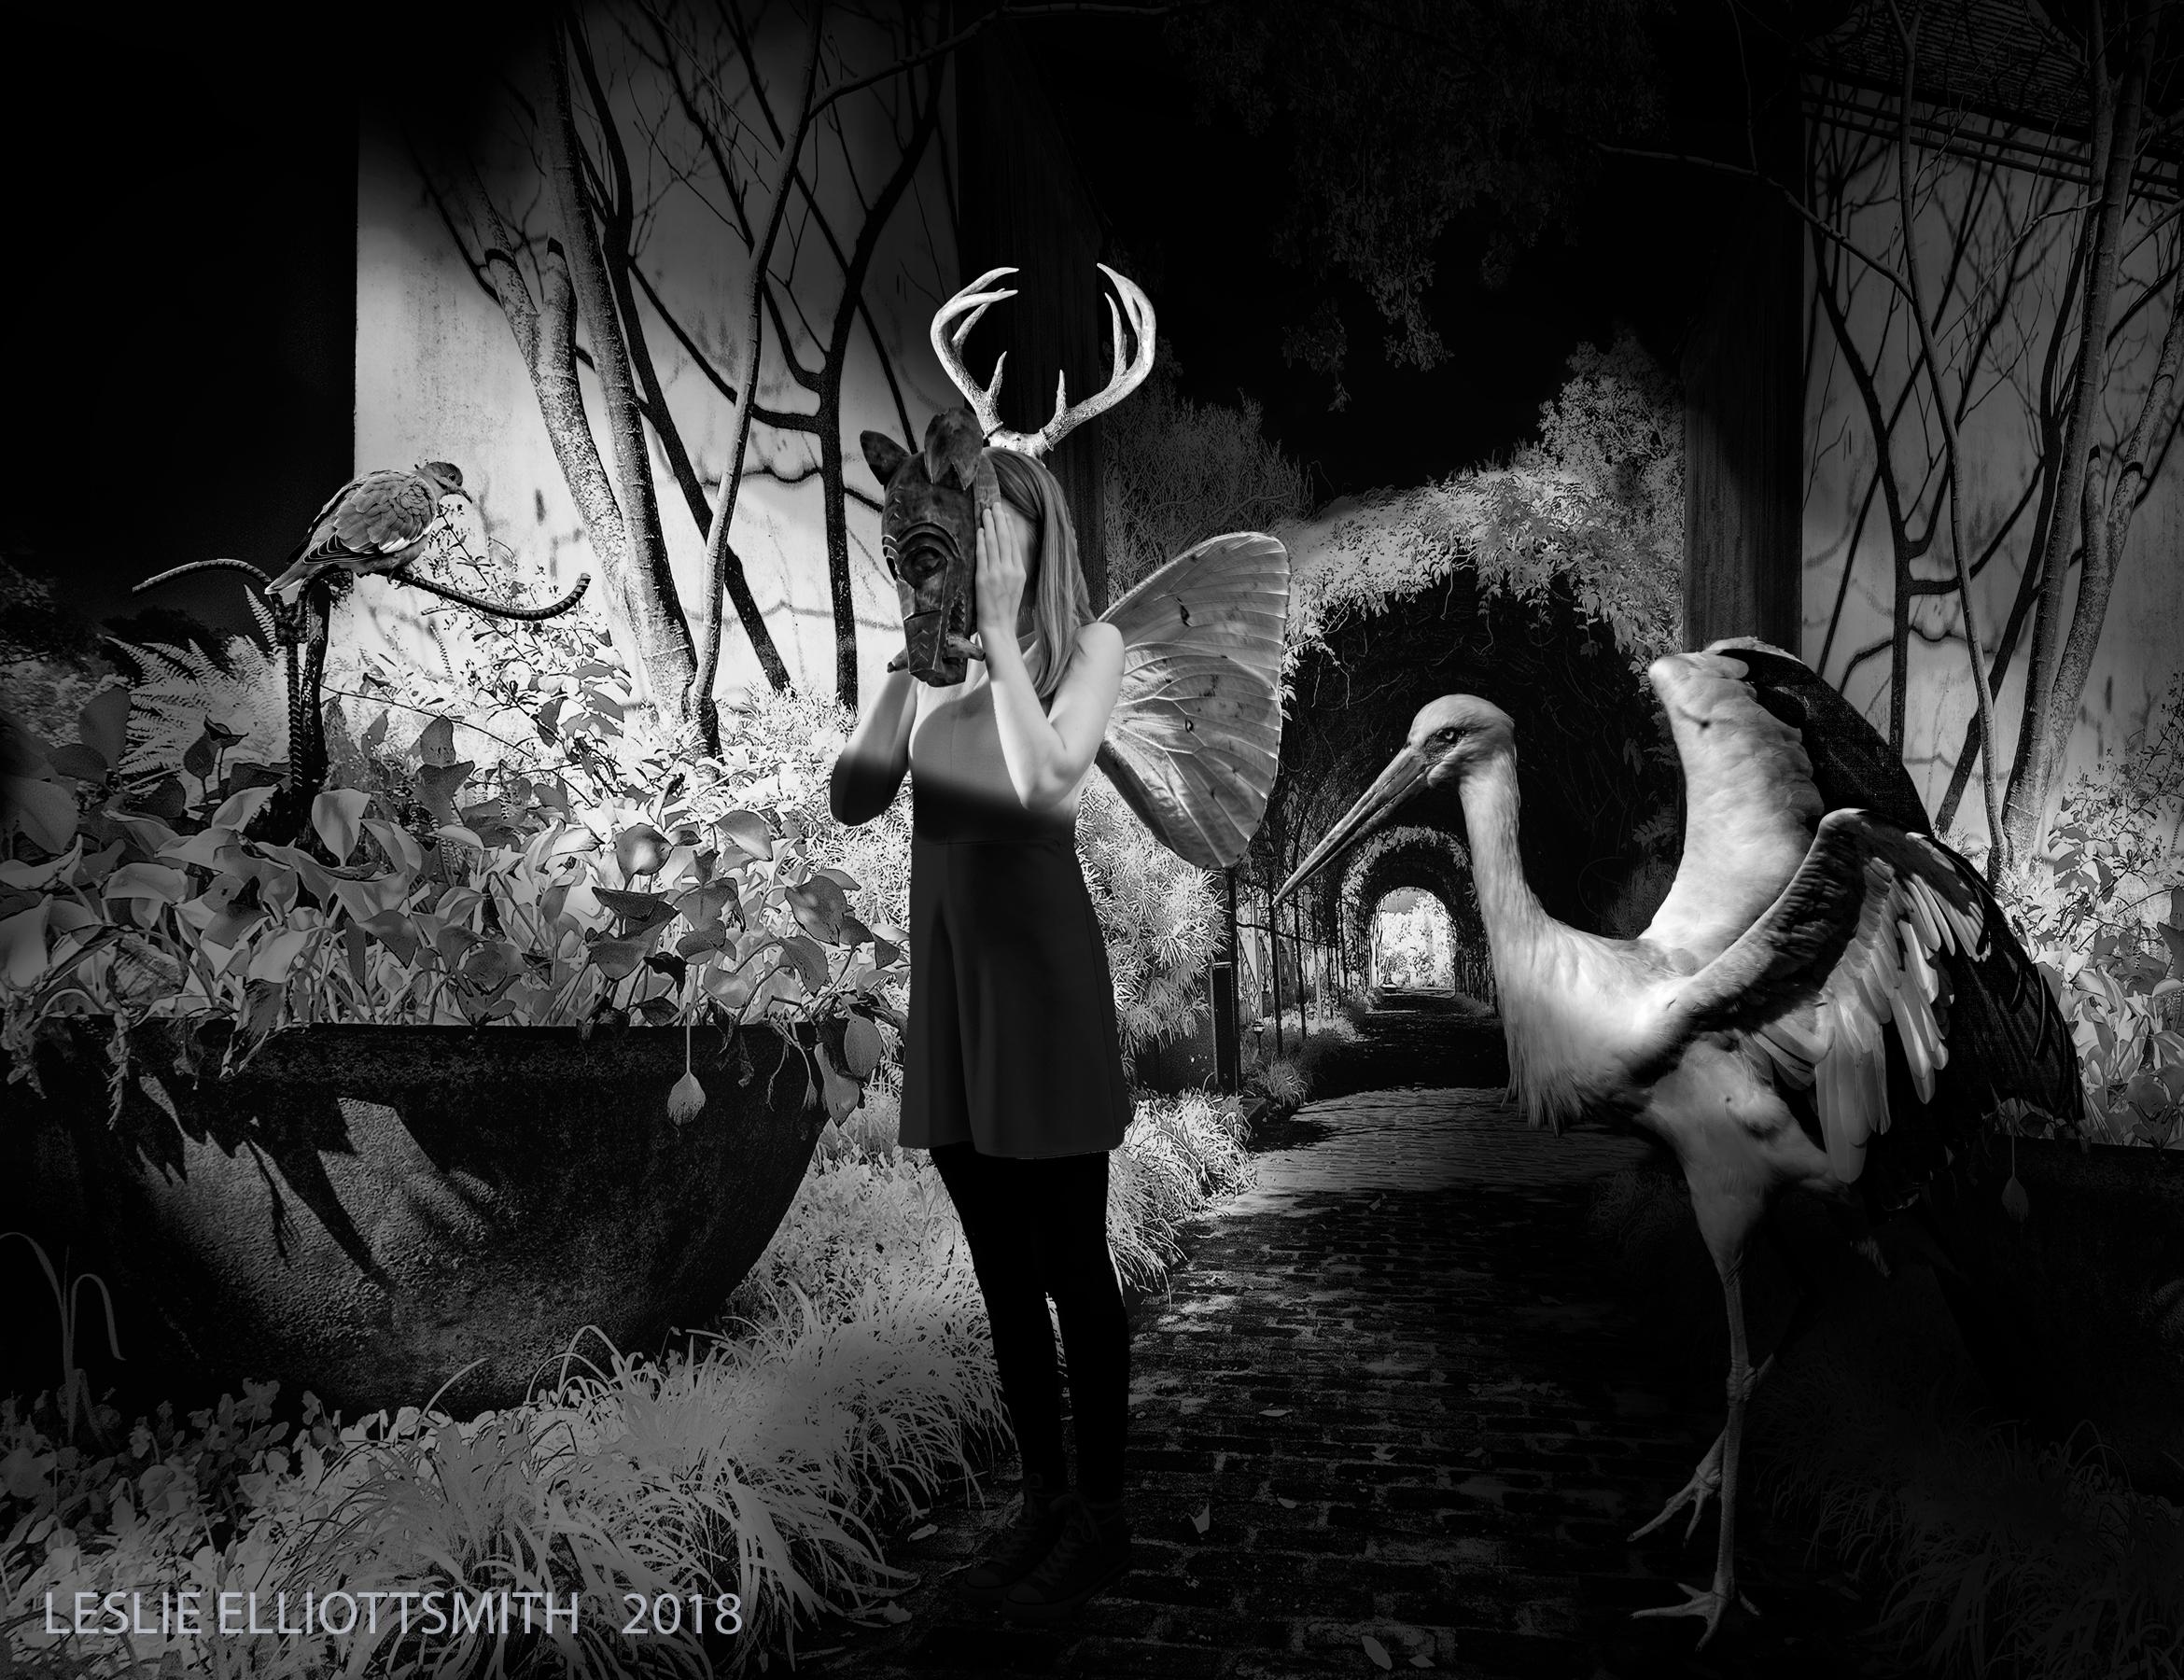 Leslie Elliottsmith Black and White Photograph - "Melas Oneiros" digital print, black and white, animals, female figure